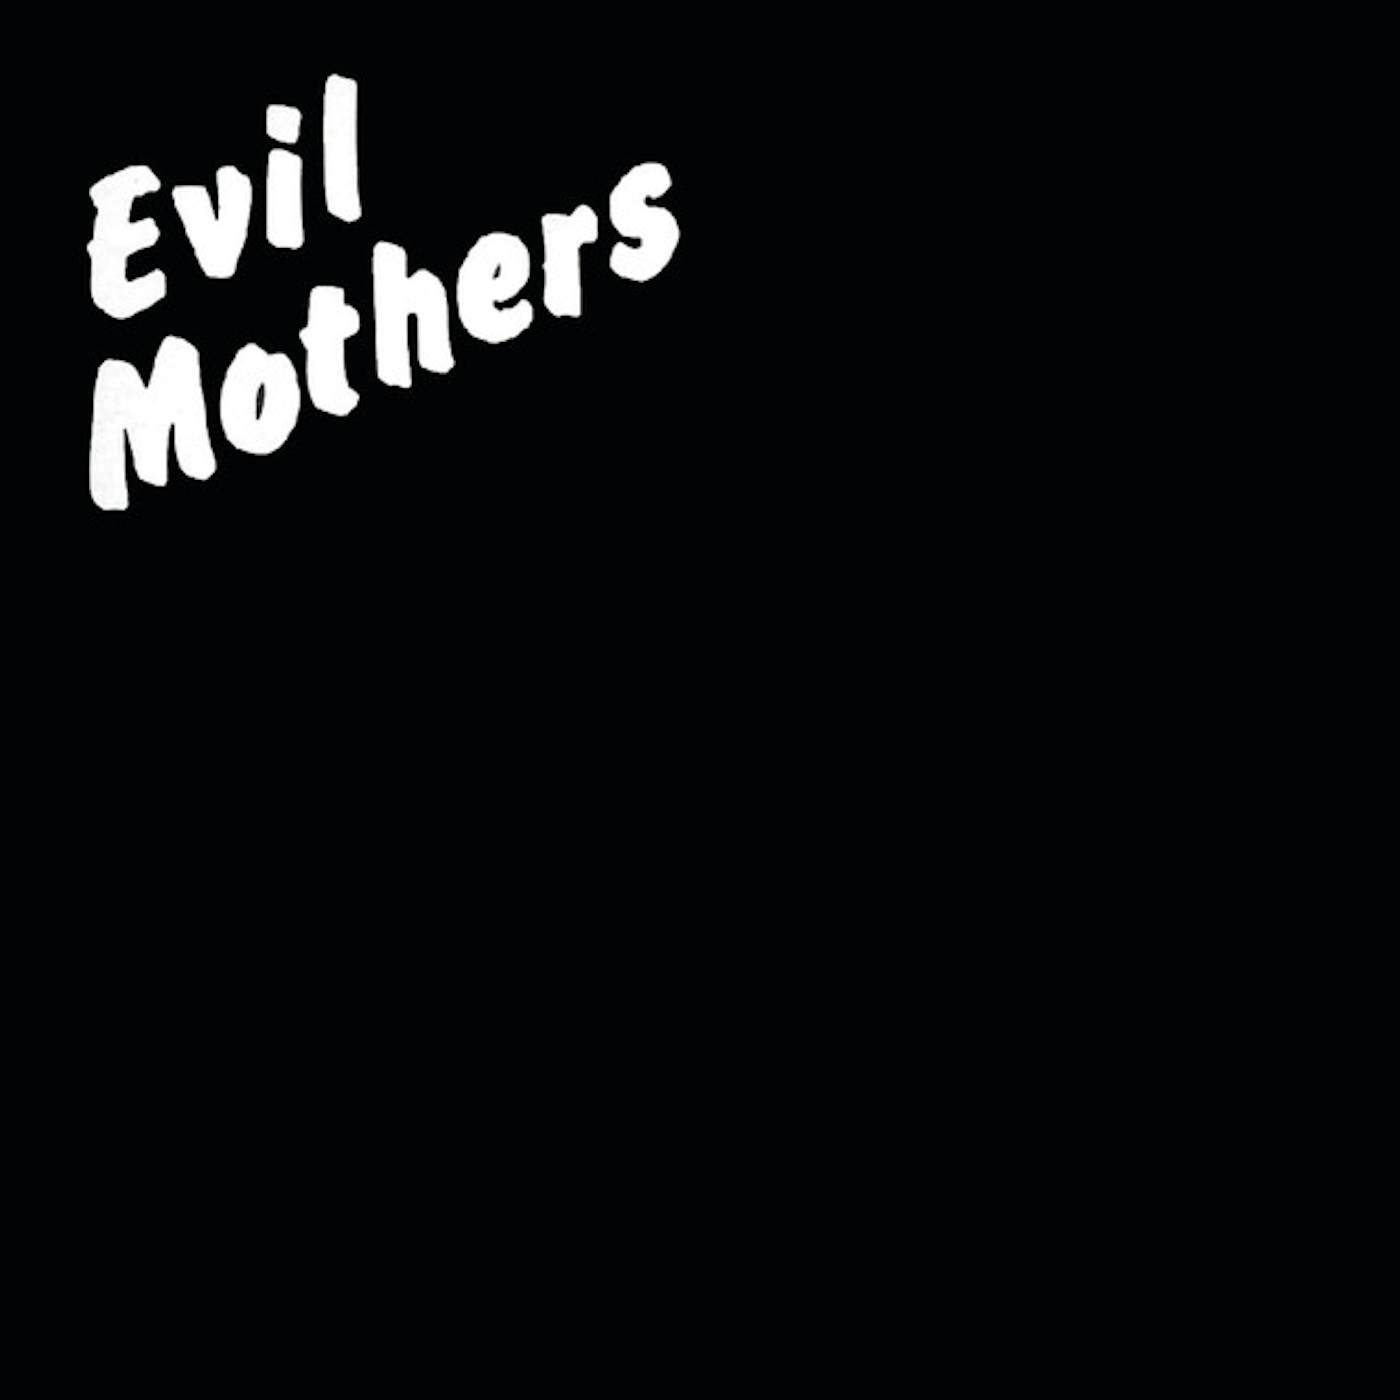 Charlie Boyer and the Voyeurs Evil Mothers Vinyl Record